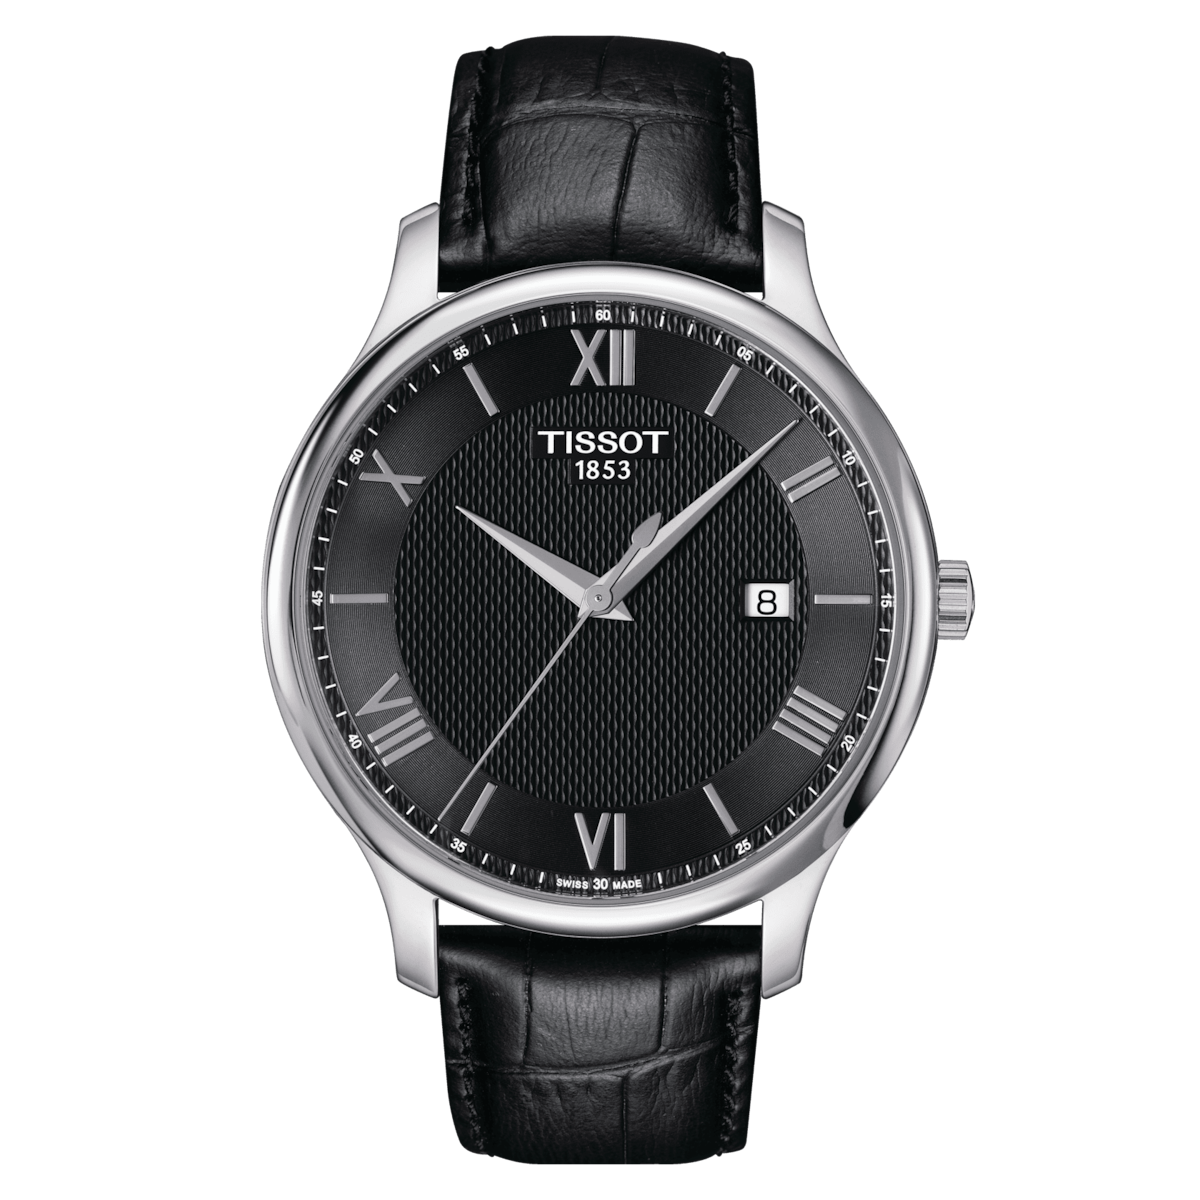 Tissot Men's T0636101605800 Tradition Watch